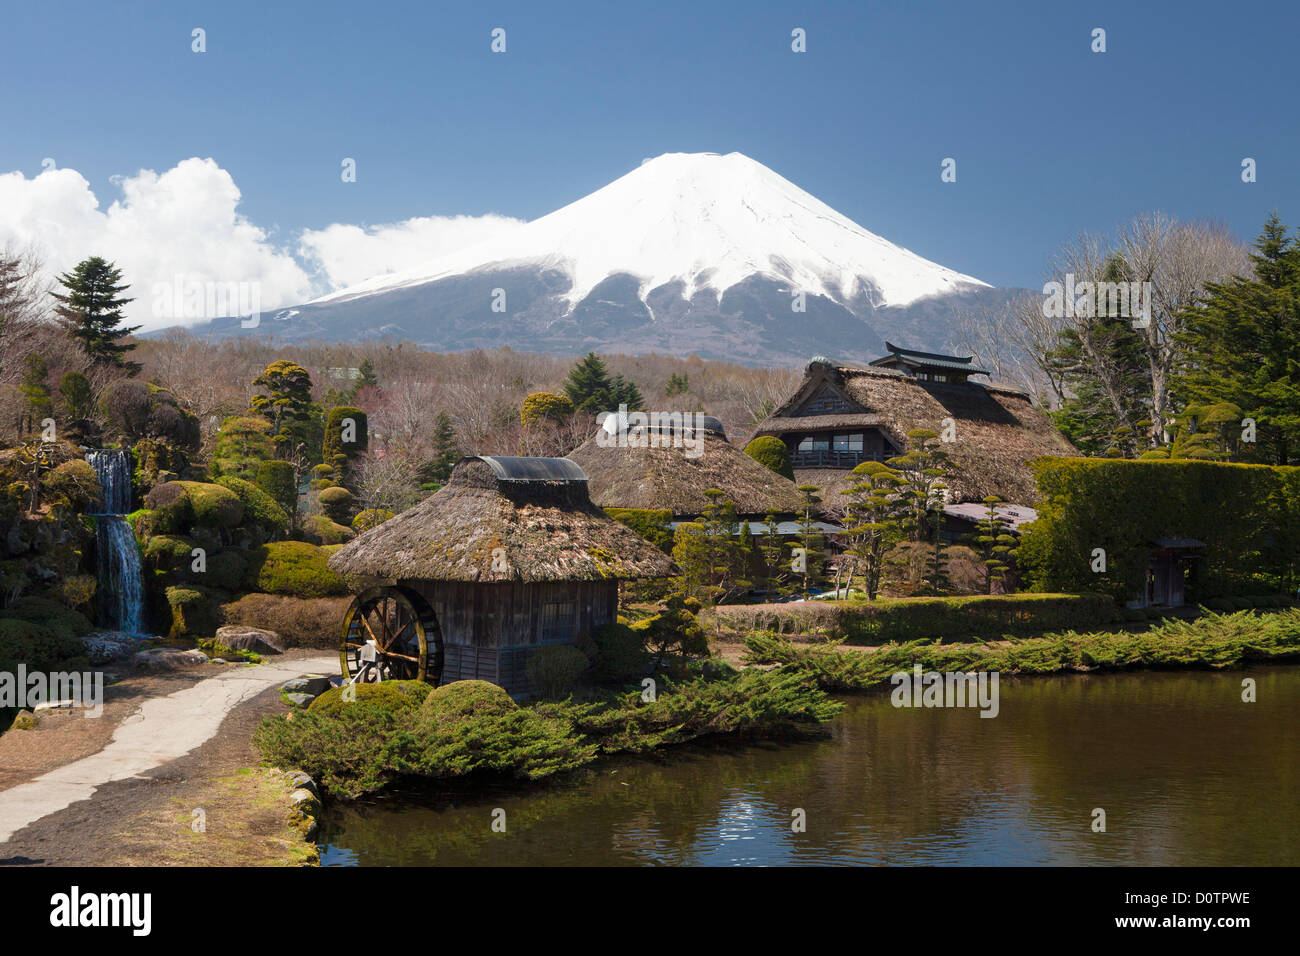 Japan, Asien, Urlaub, Reisen, Oshino, traditionelle Architektur, Fuji, Mount Fuji, Fujiyama, Berg, Schnee, Frühling, Vulkan, Gar Stockfoto